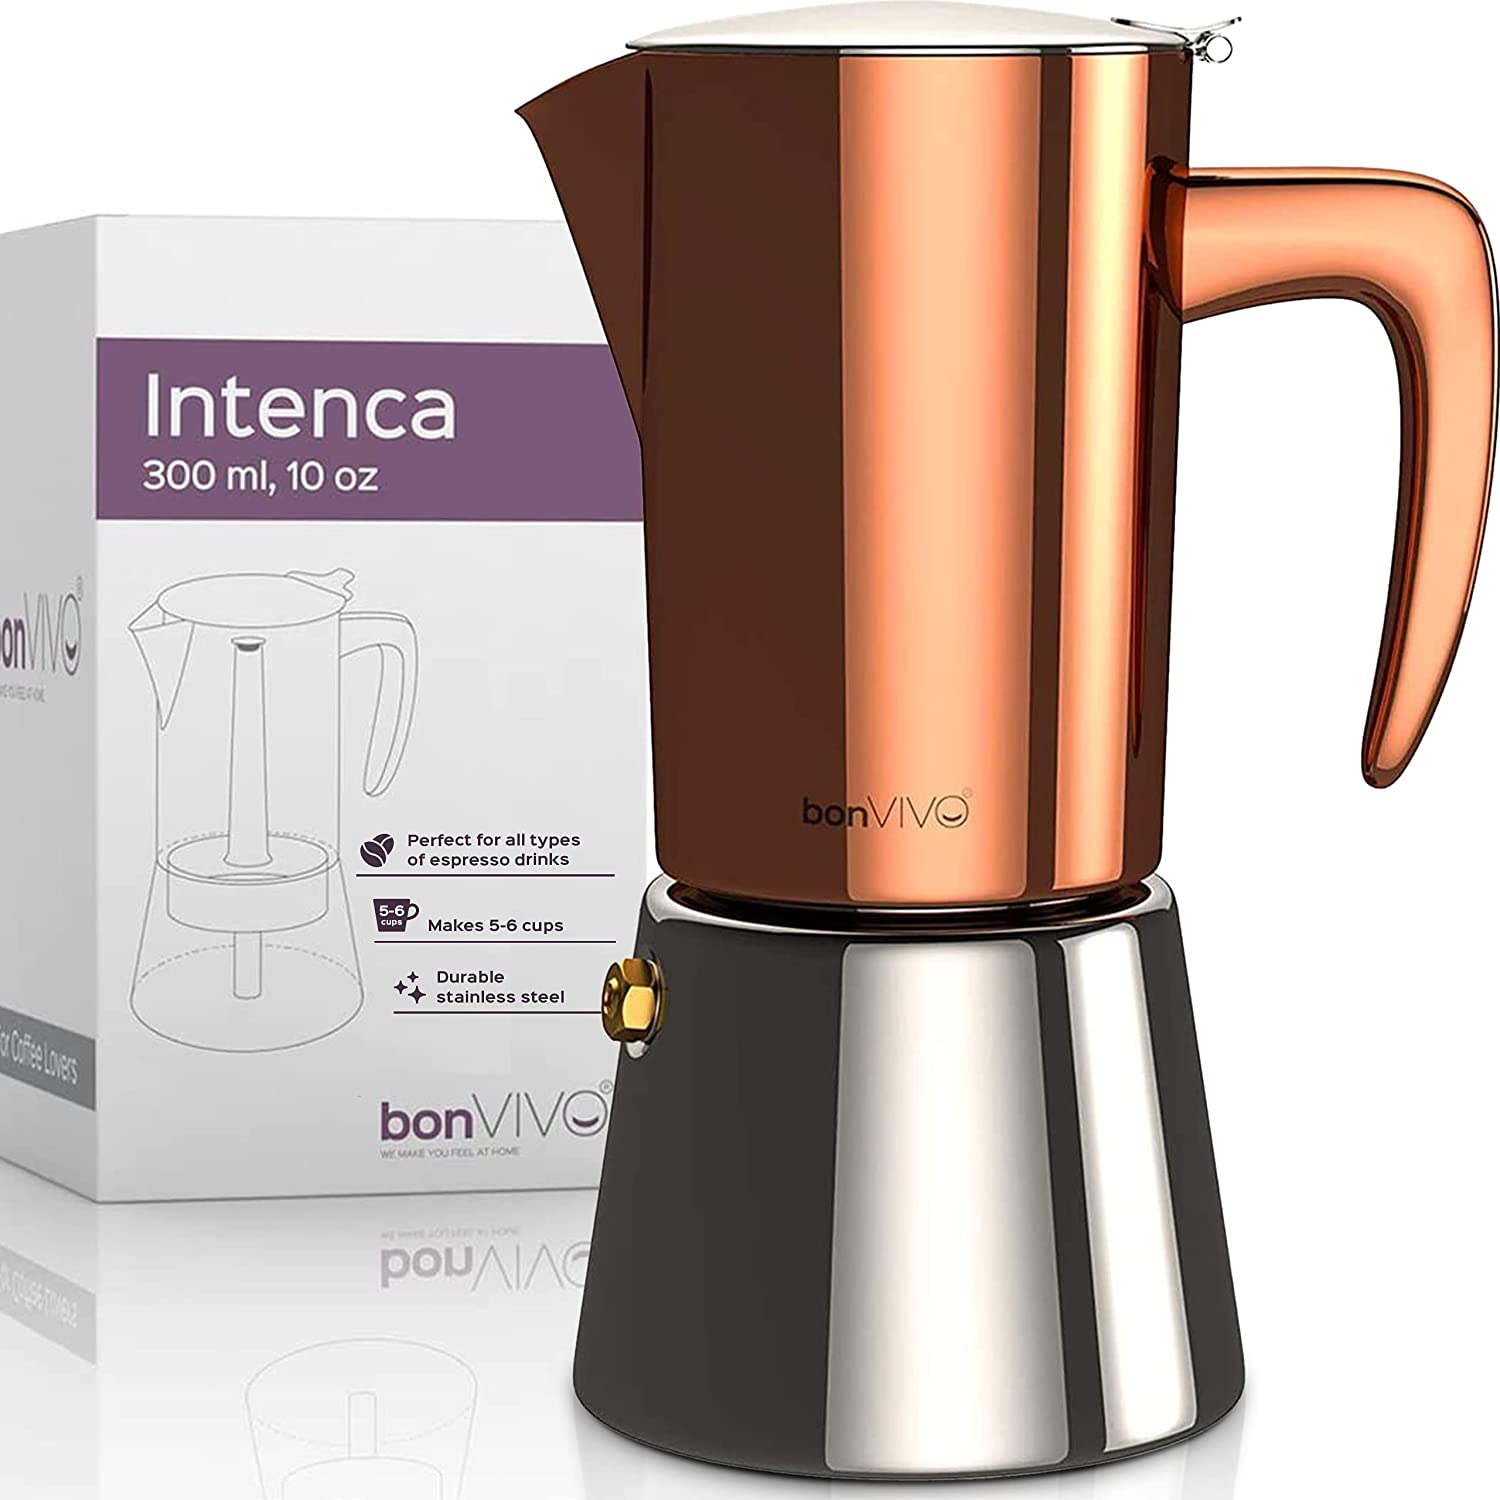 bonVIVO Intenca Cafe-Style Stainless Steel Stovetop Espresso Maker